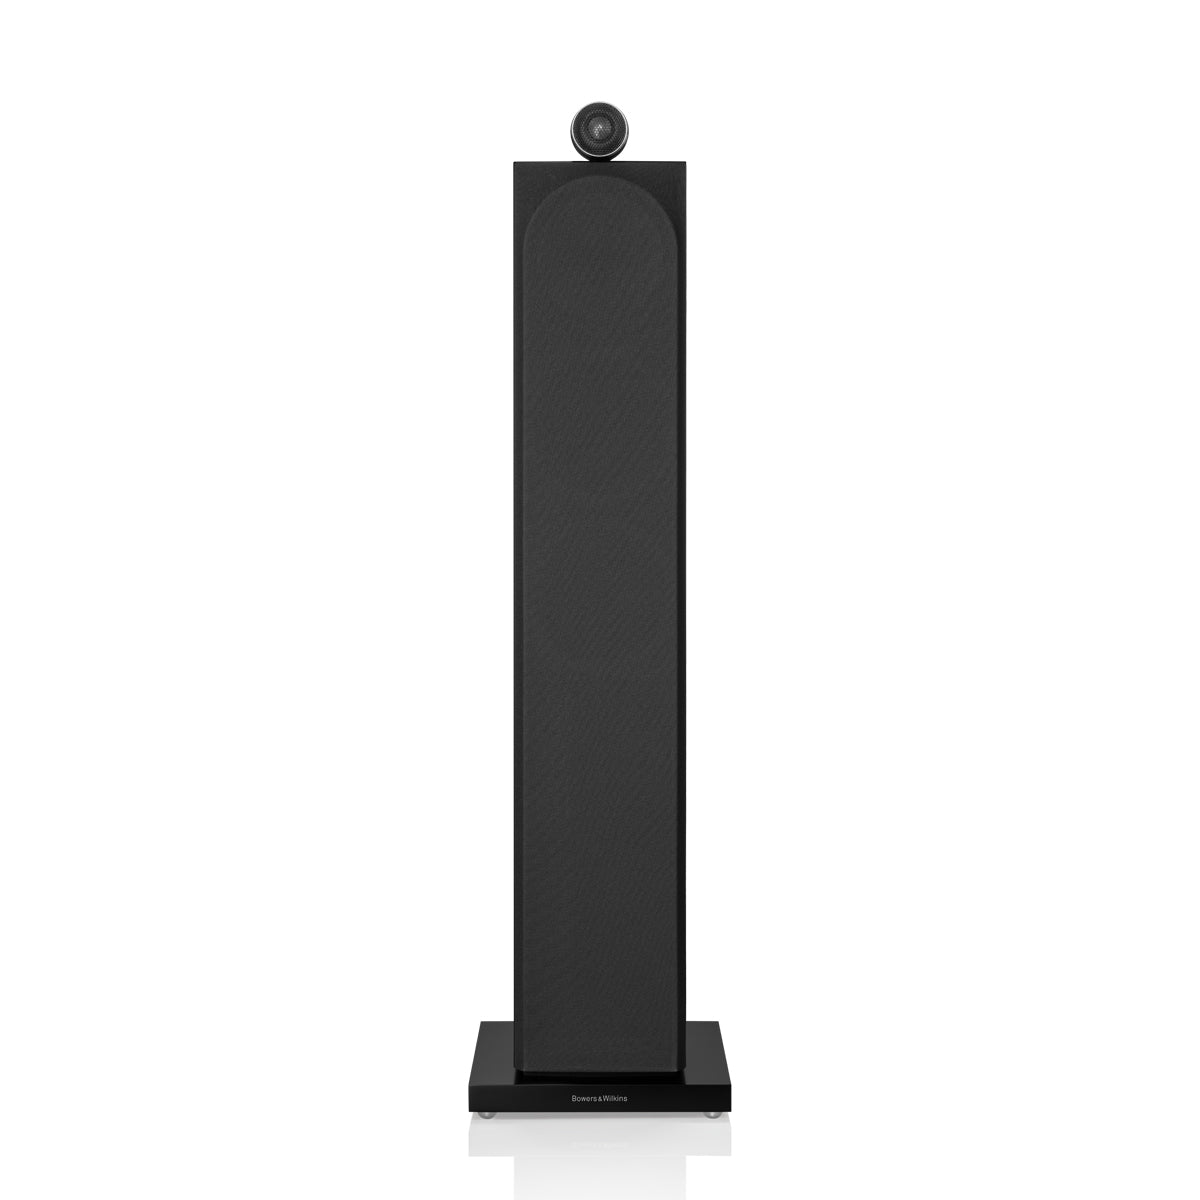 Bowers & Wilkins 703 S3 3-Way Floor Standing Speakers - Black - The Audio Experts